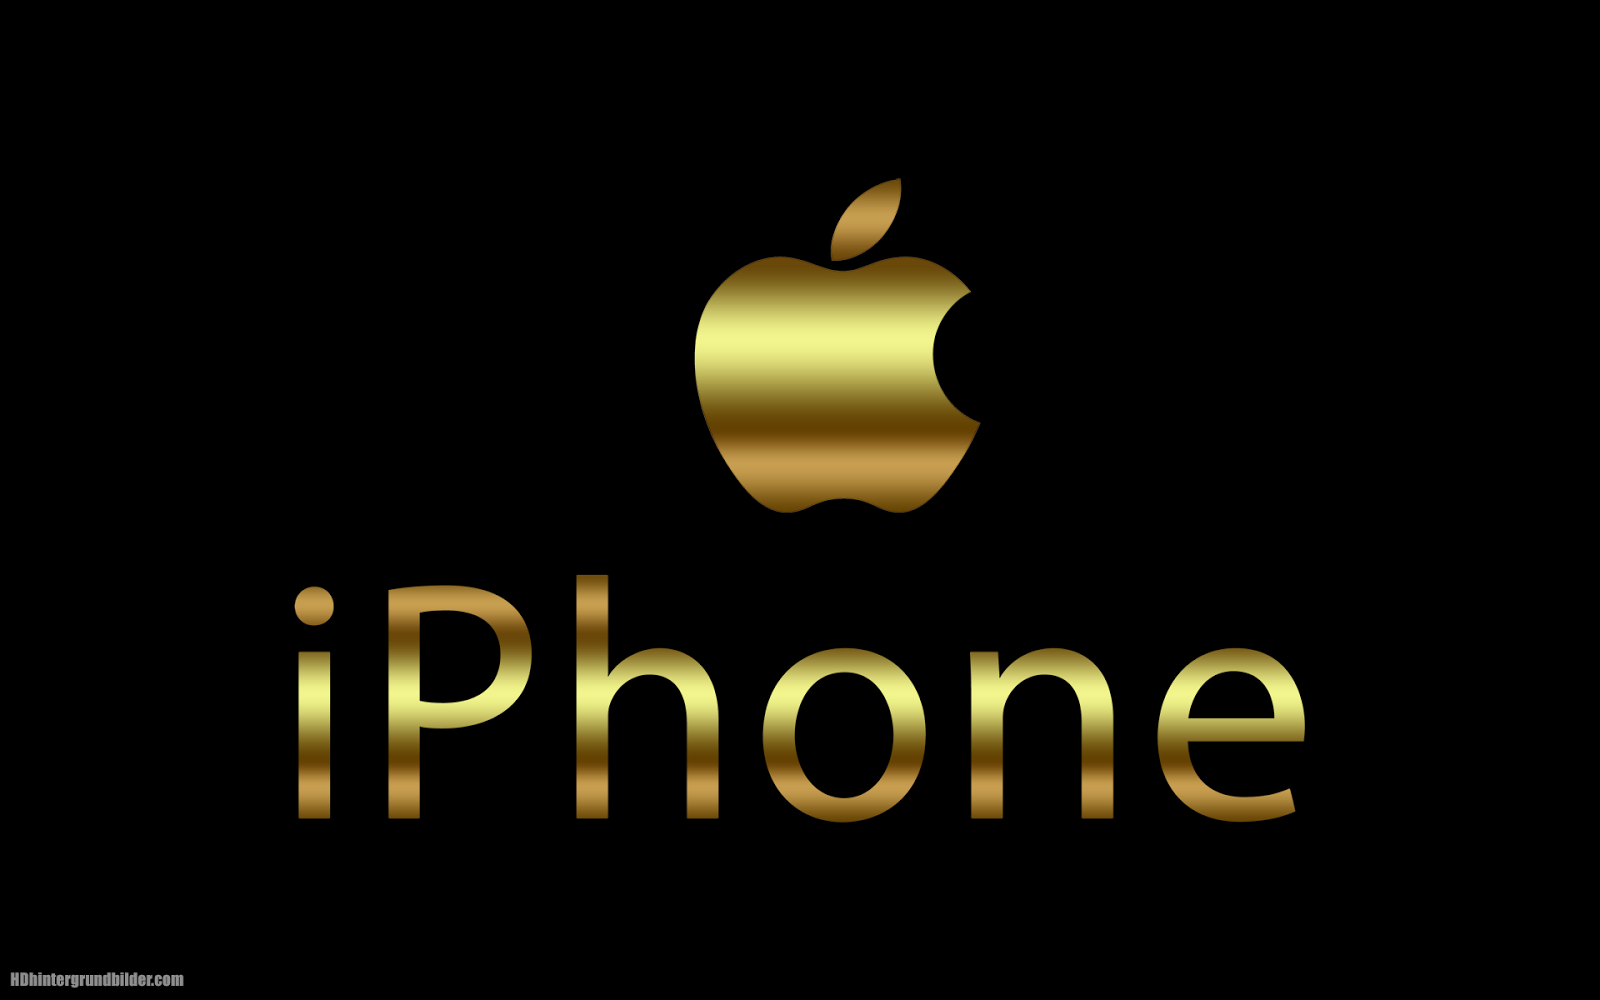 Мир золотое яблоко. Голд эпл эпл Голд. Логотип айфона. Логотип айфон золото. Золотой логотип Apple.